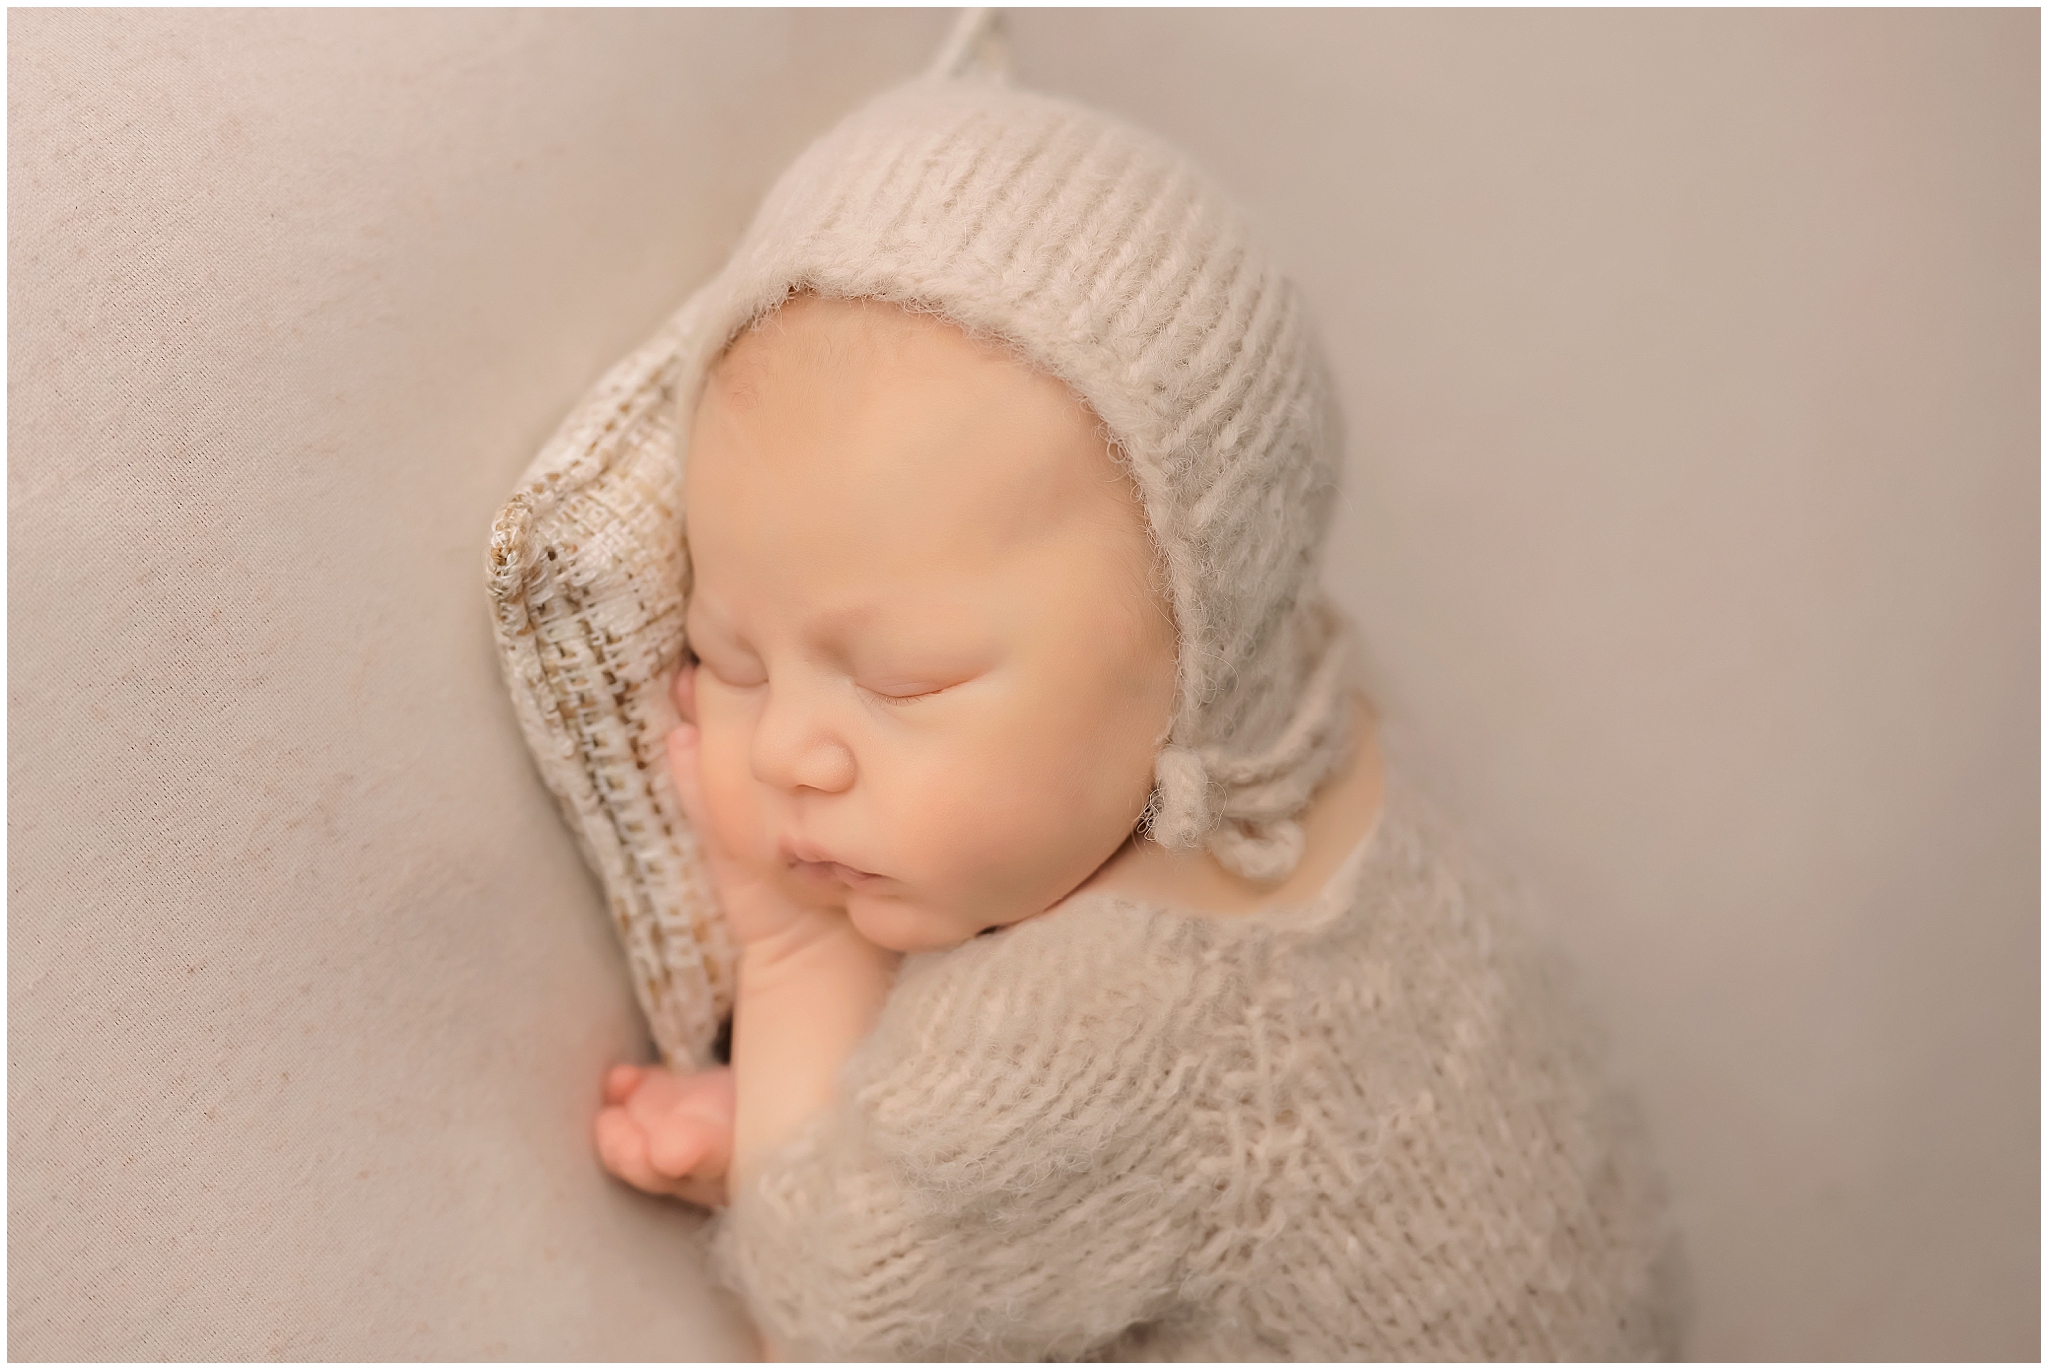 newborn sleeping during photo session 